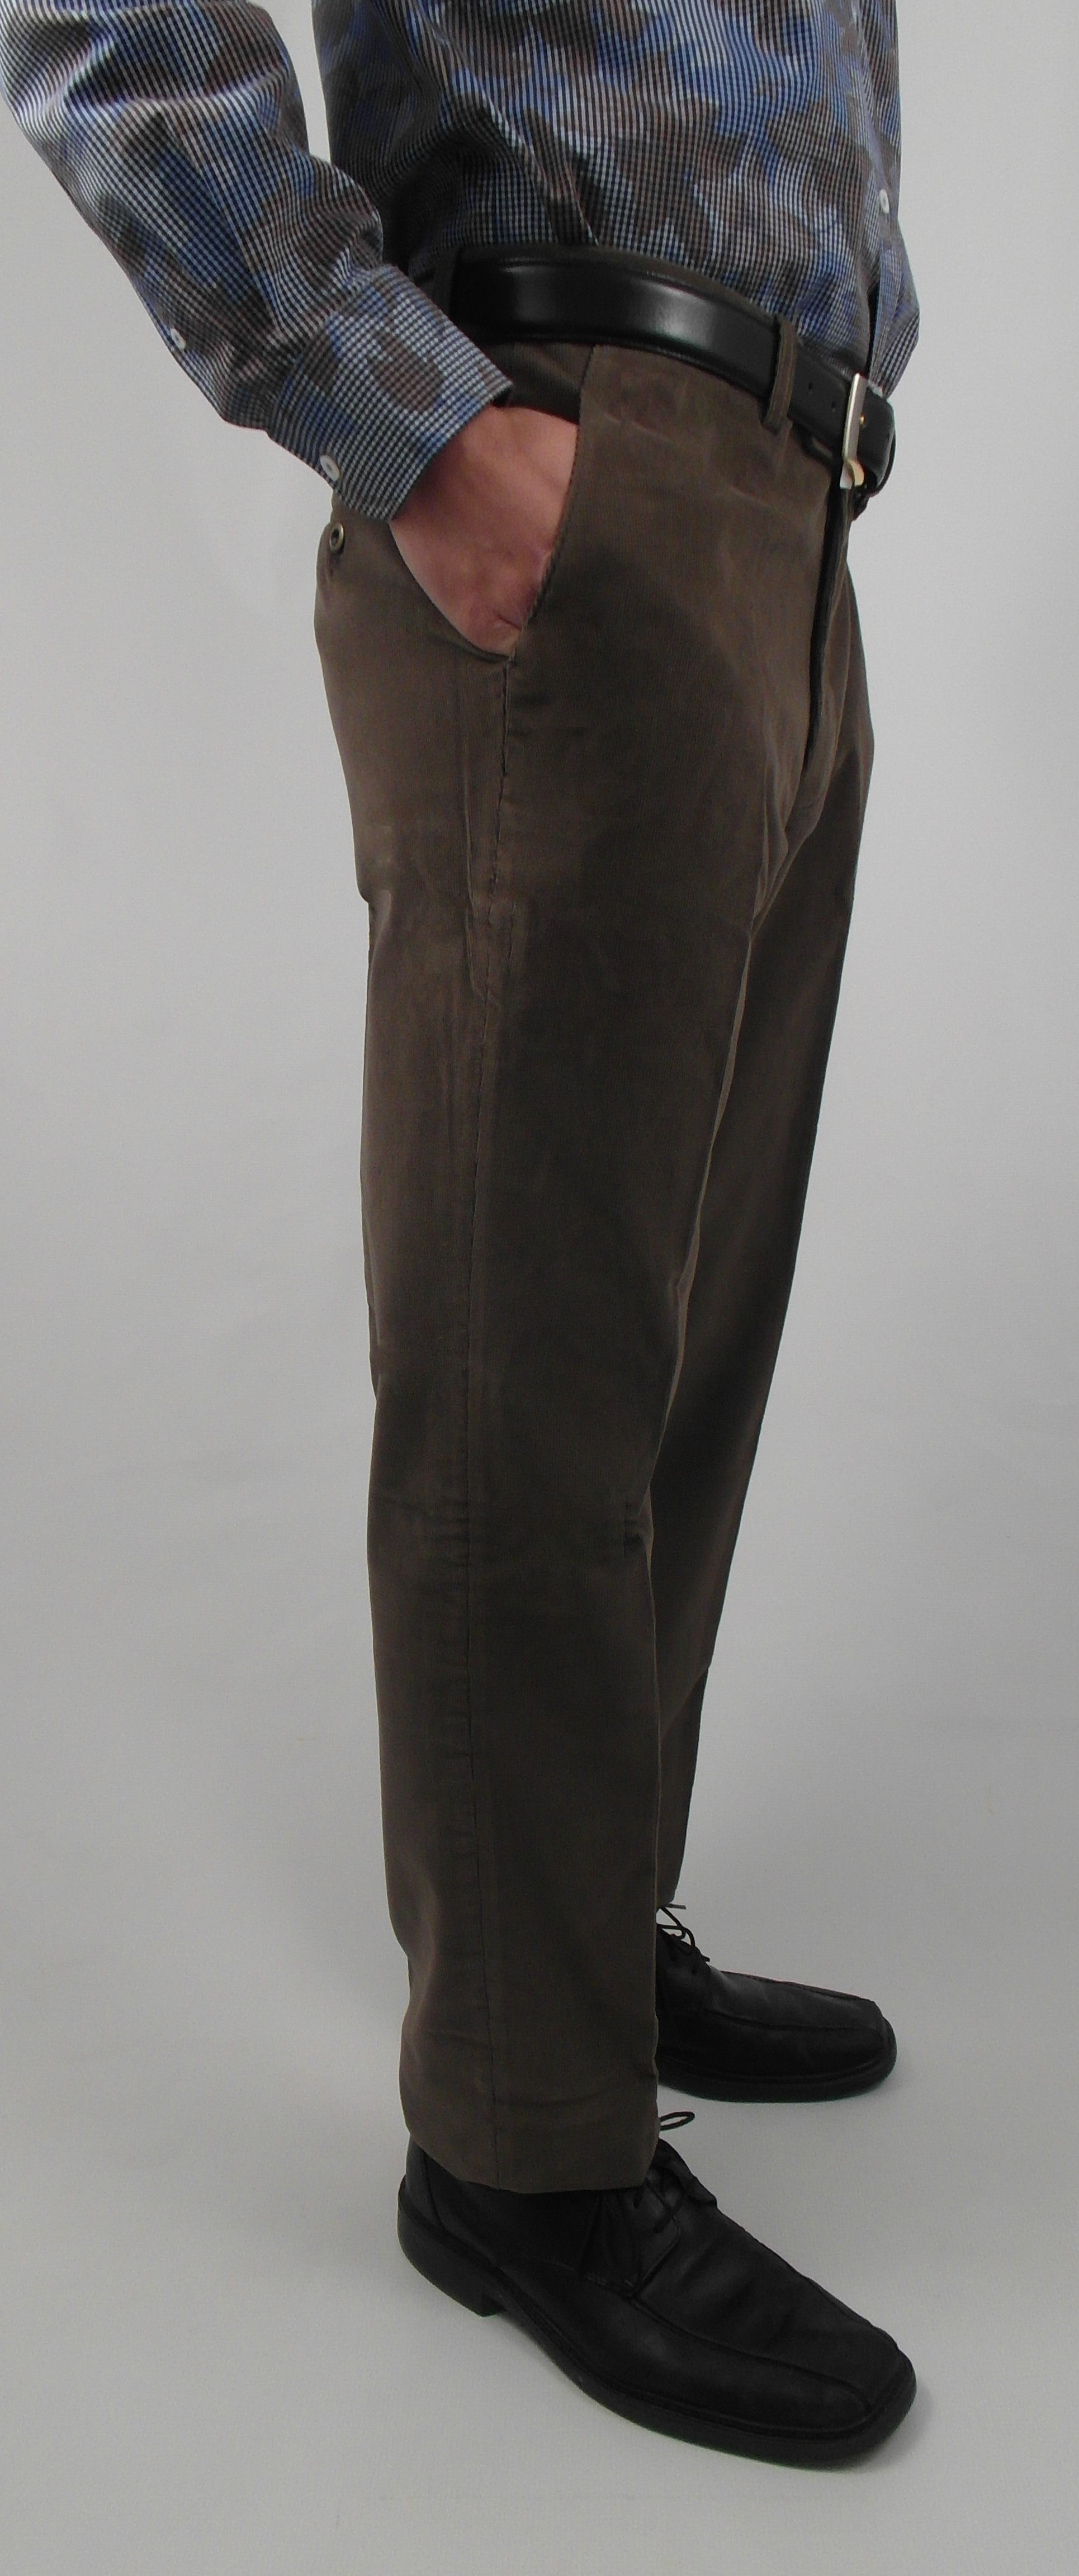 Gala - A1 - Dress Pant - Mark (Flat Front) - Durable Microfiber Polyes 